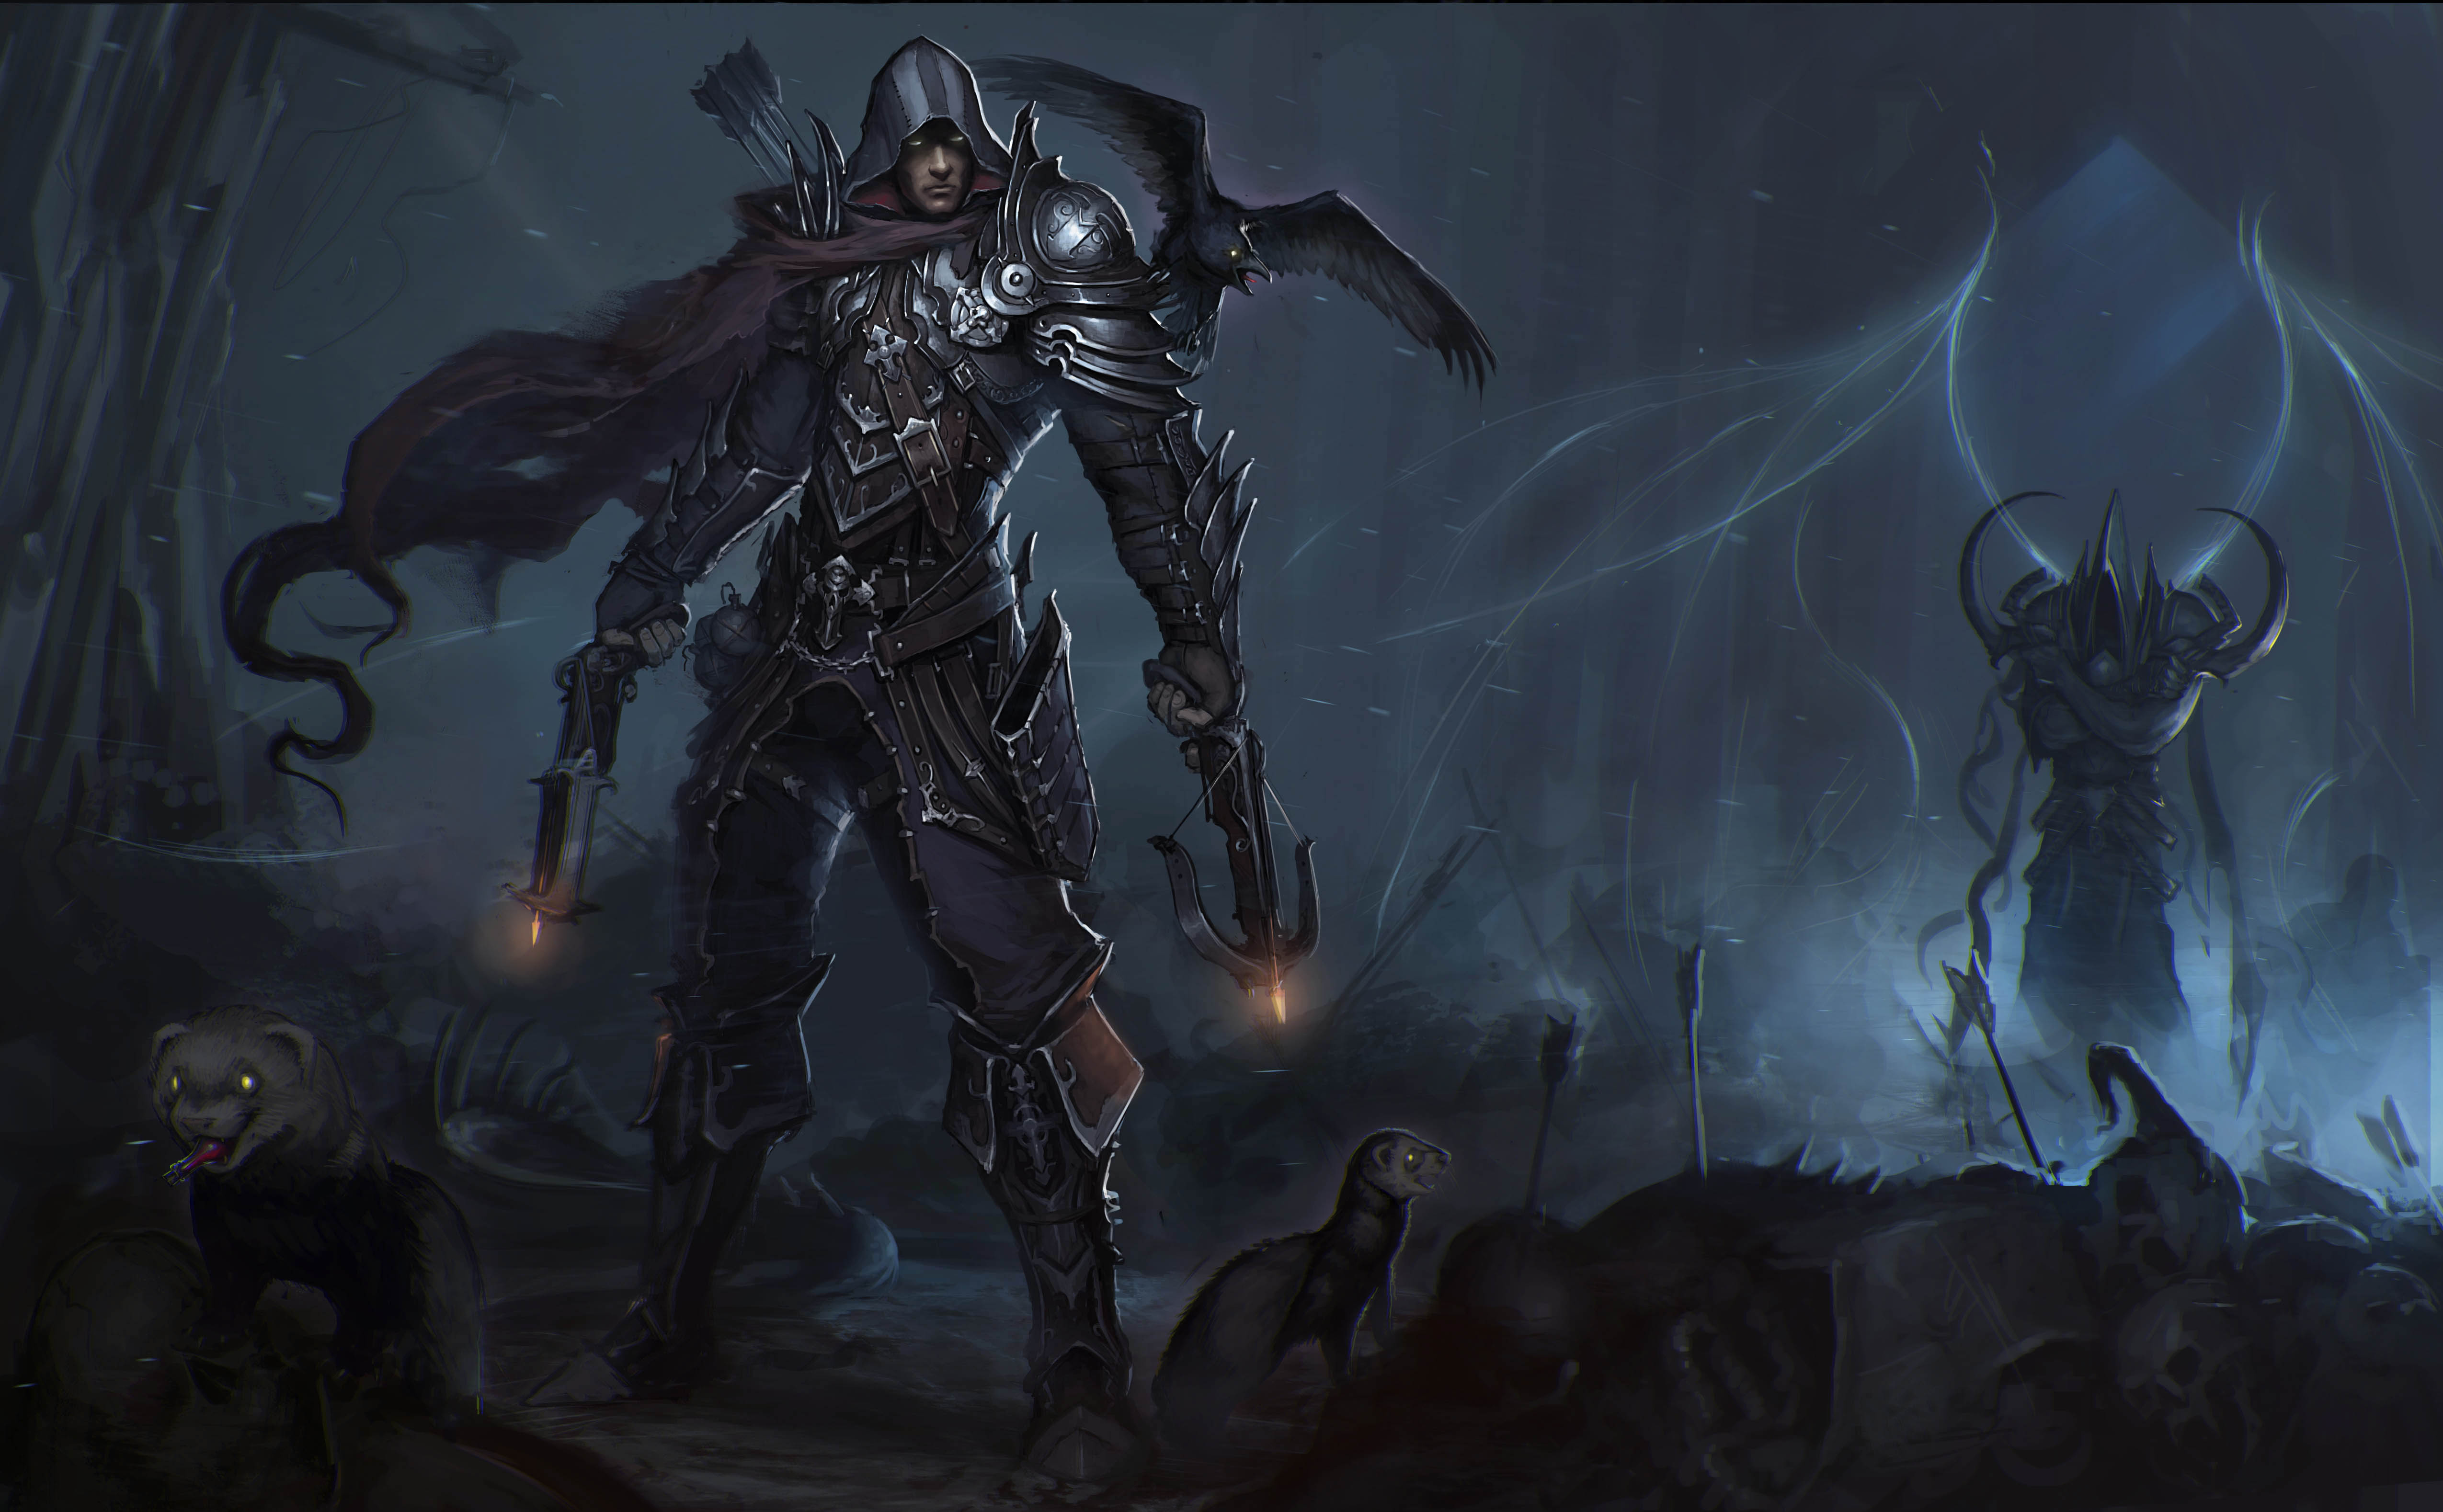 Diablo III: Reaper Of Souls 4k Ultra HD Wallpaper and Background Image